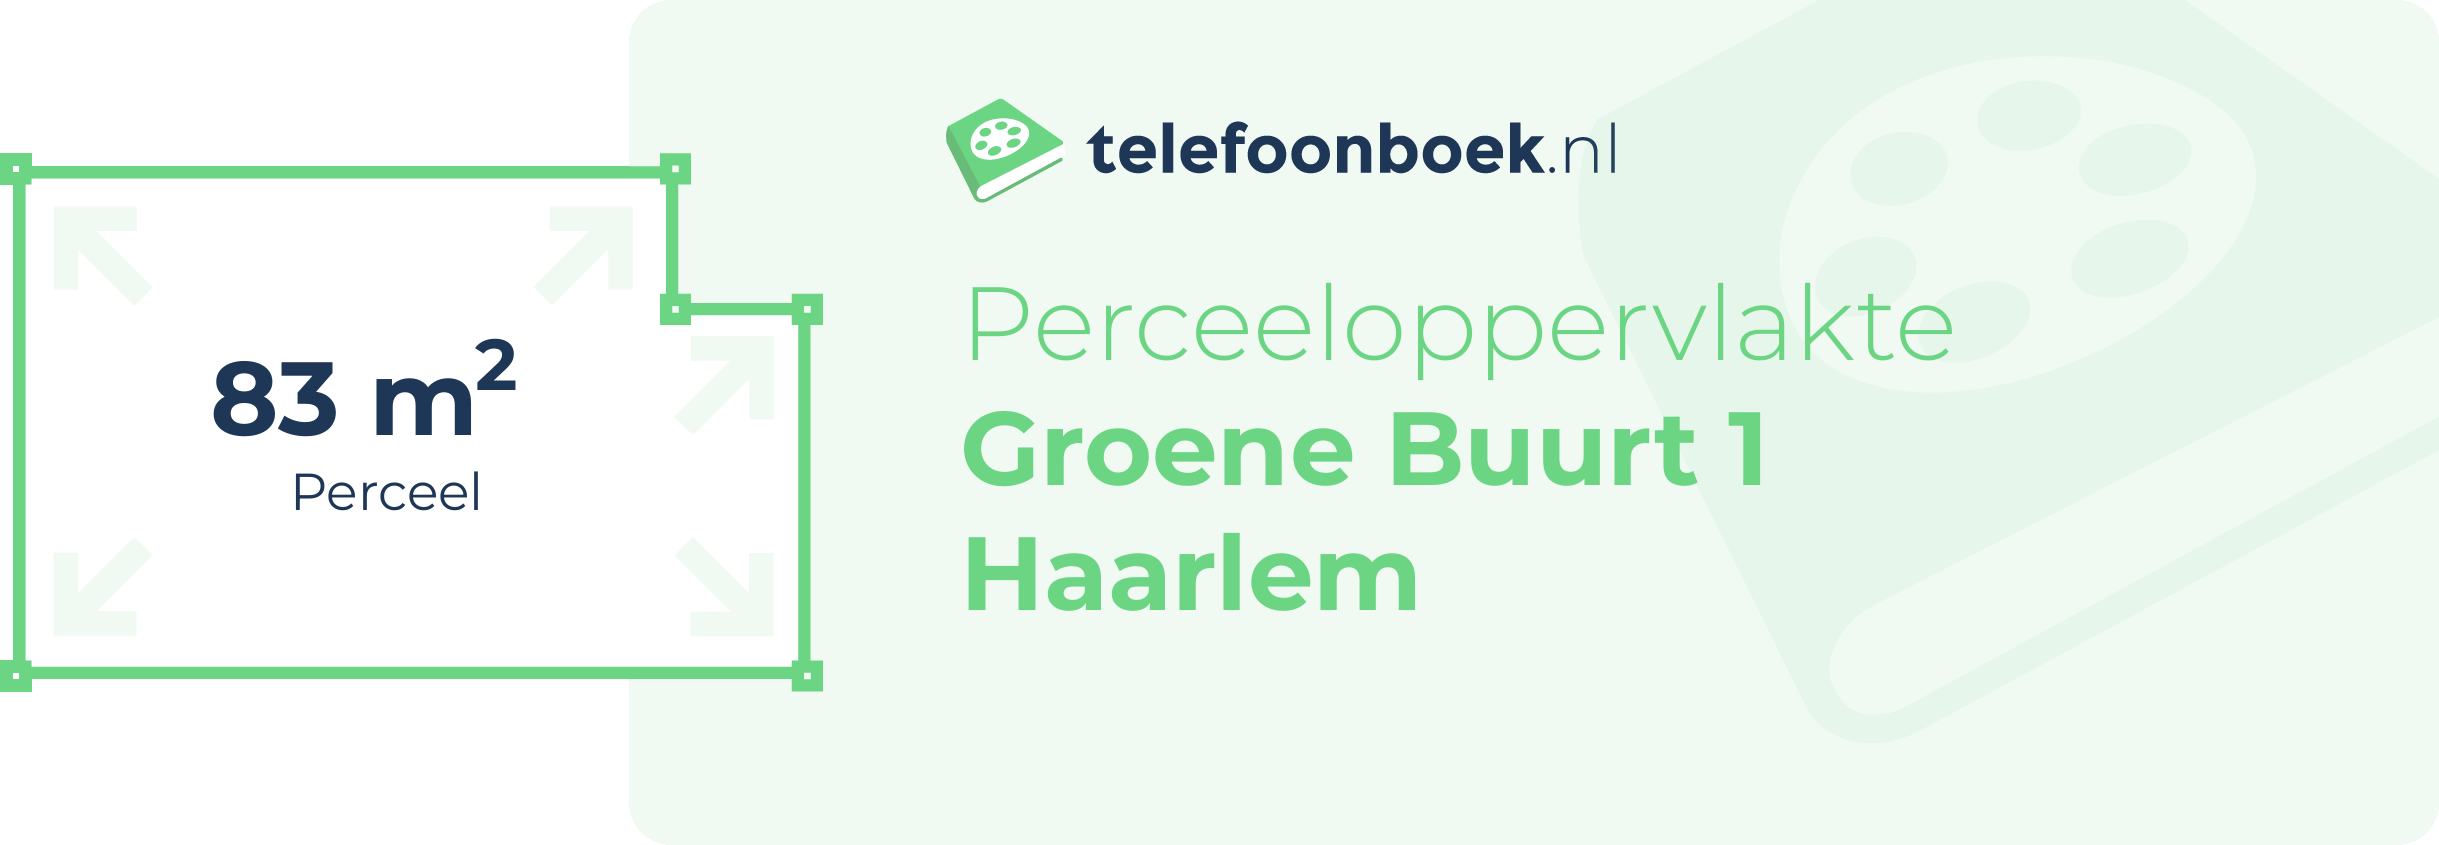 Perceeloppervlakte Groene Buurt 1 Haarlem